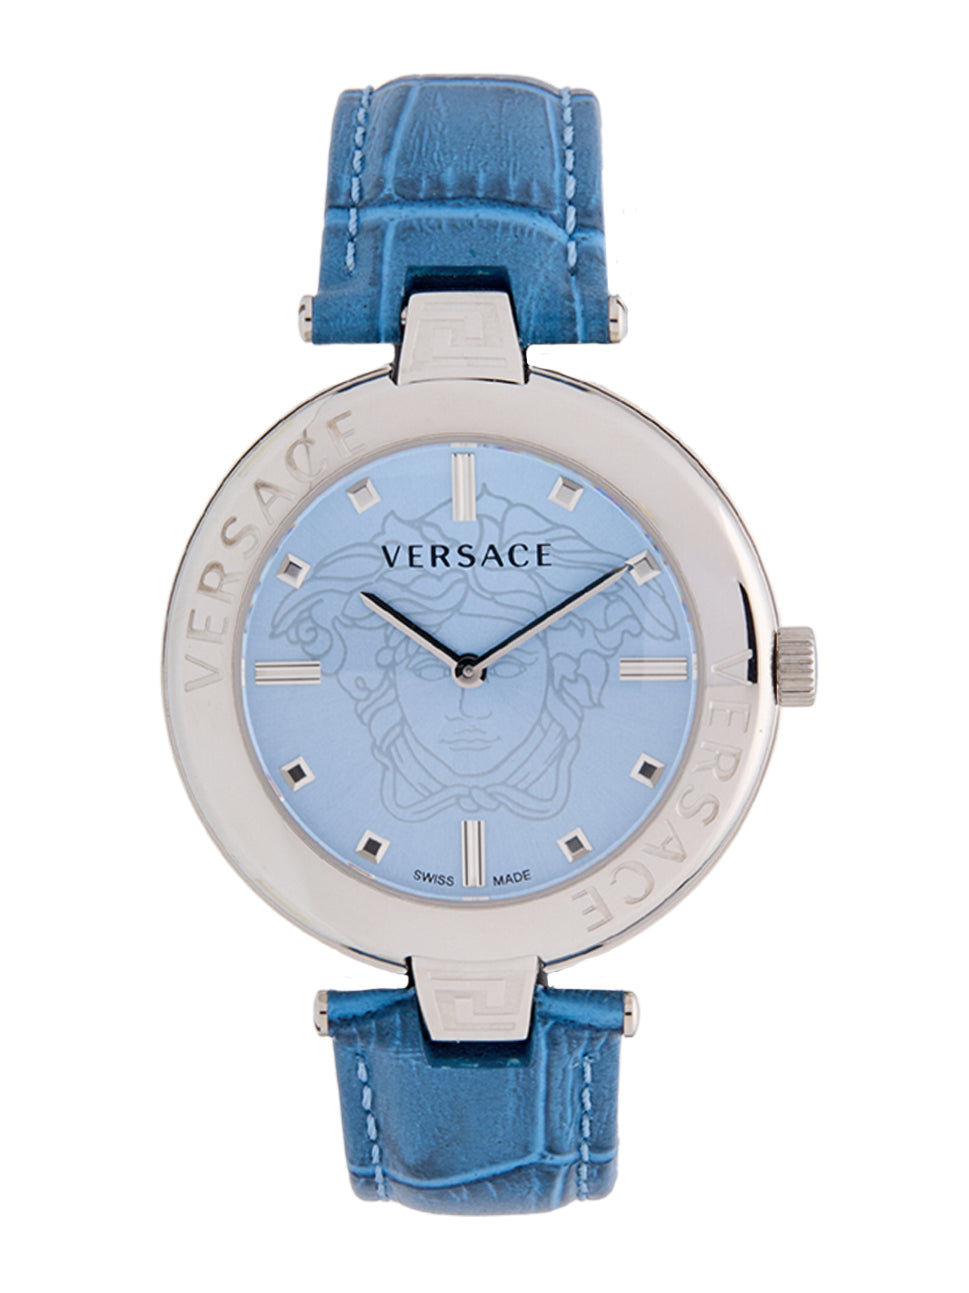 Versace Women's New Lady Damne Watch Blue/Blue 38mm VE2J00121